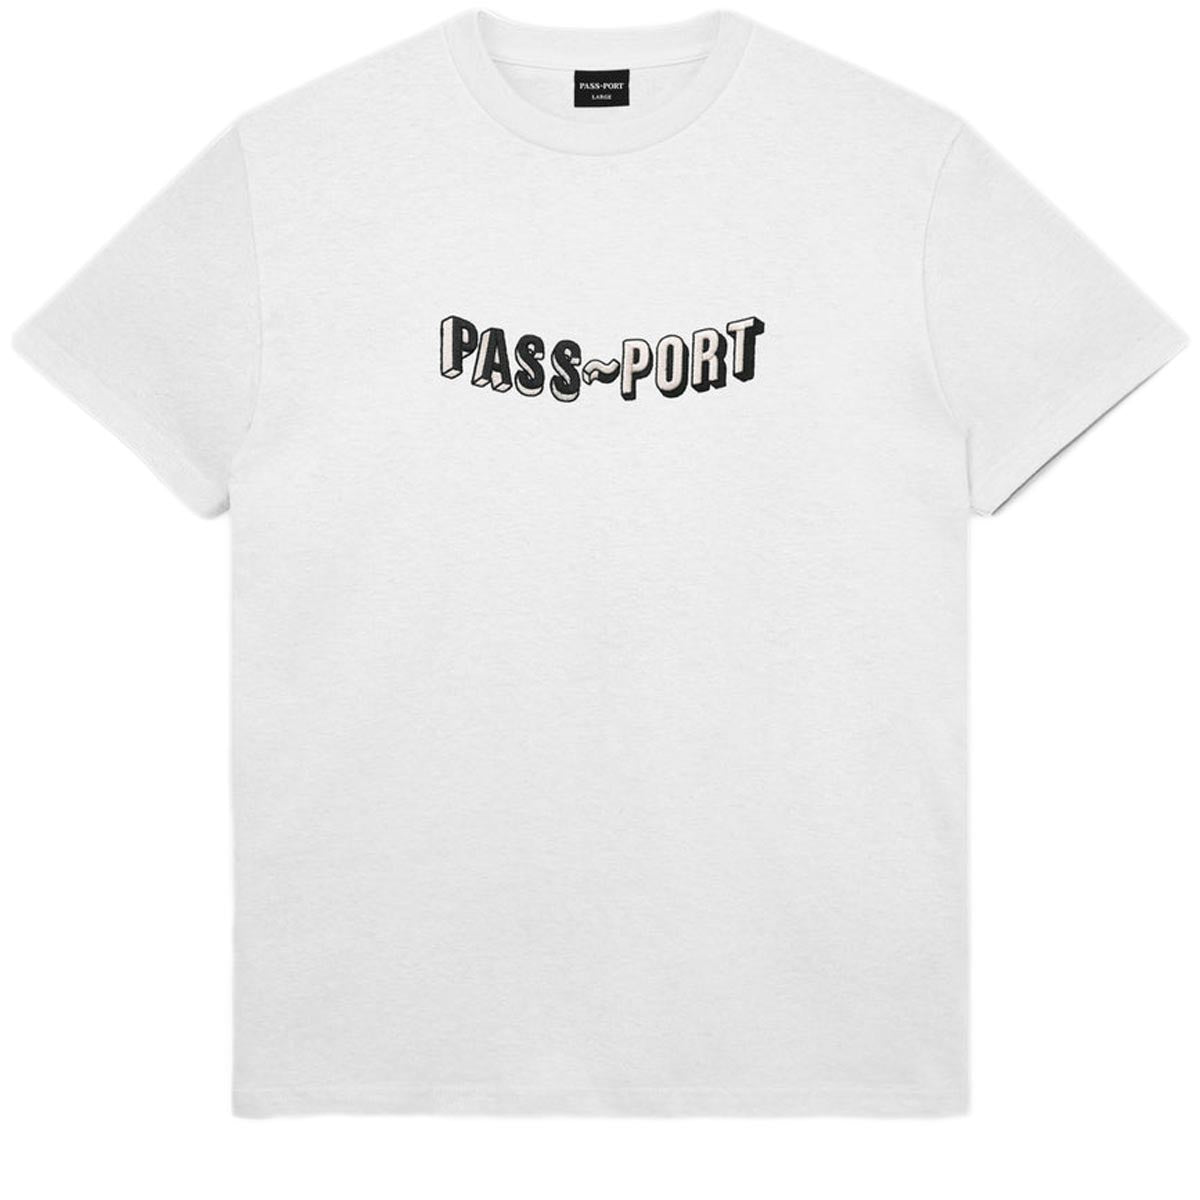 Passport Sunken Logo Embroidery T-Shirt - White image 1